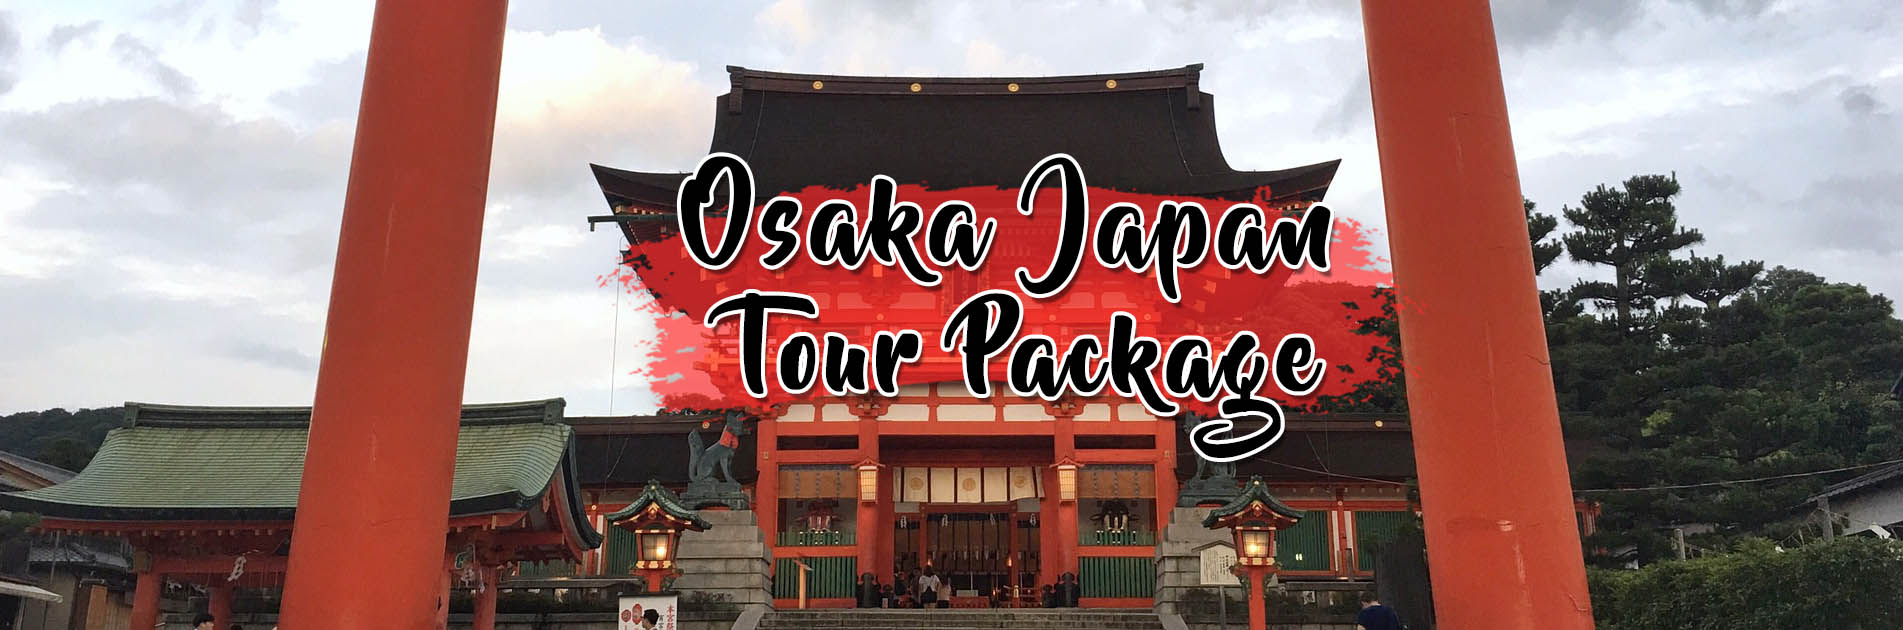 tokyo osaka tour package